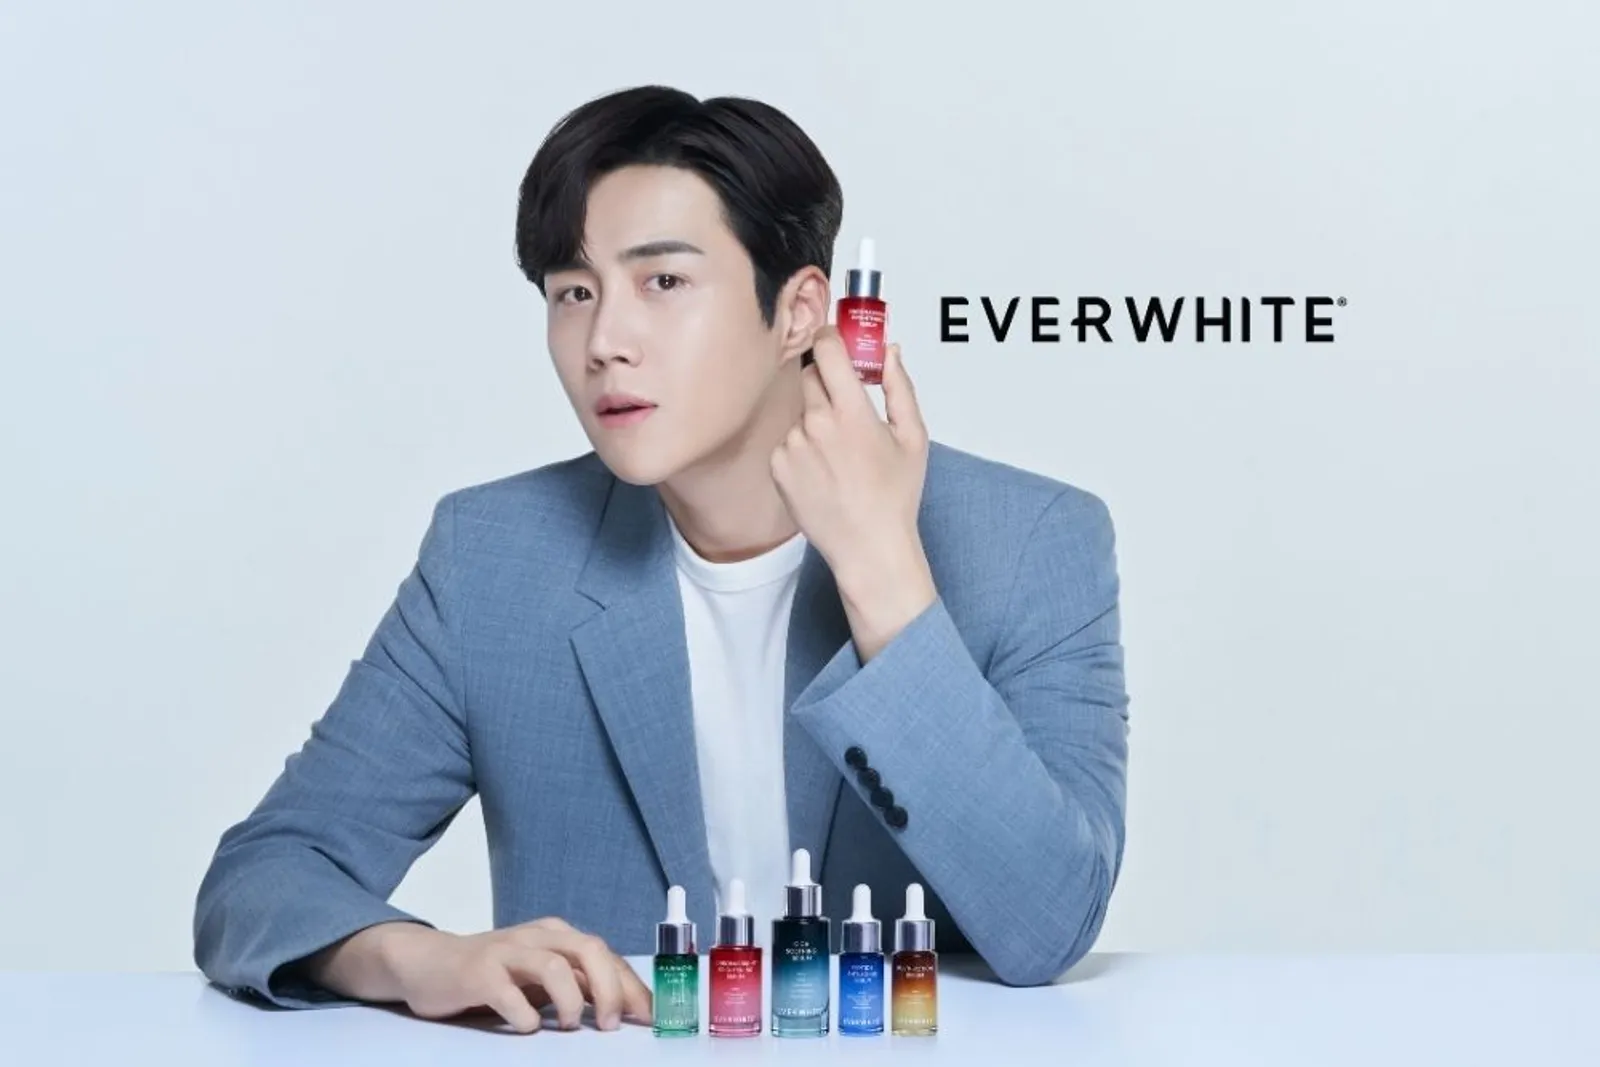 Brand Kecantikan Lokal Gandeng Kim Seon Ho Sebagai Brand Ambassador